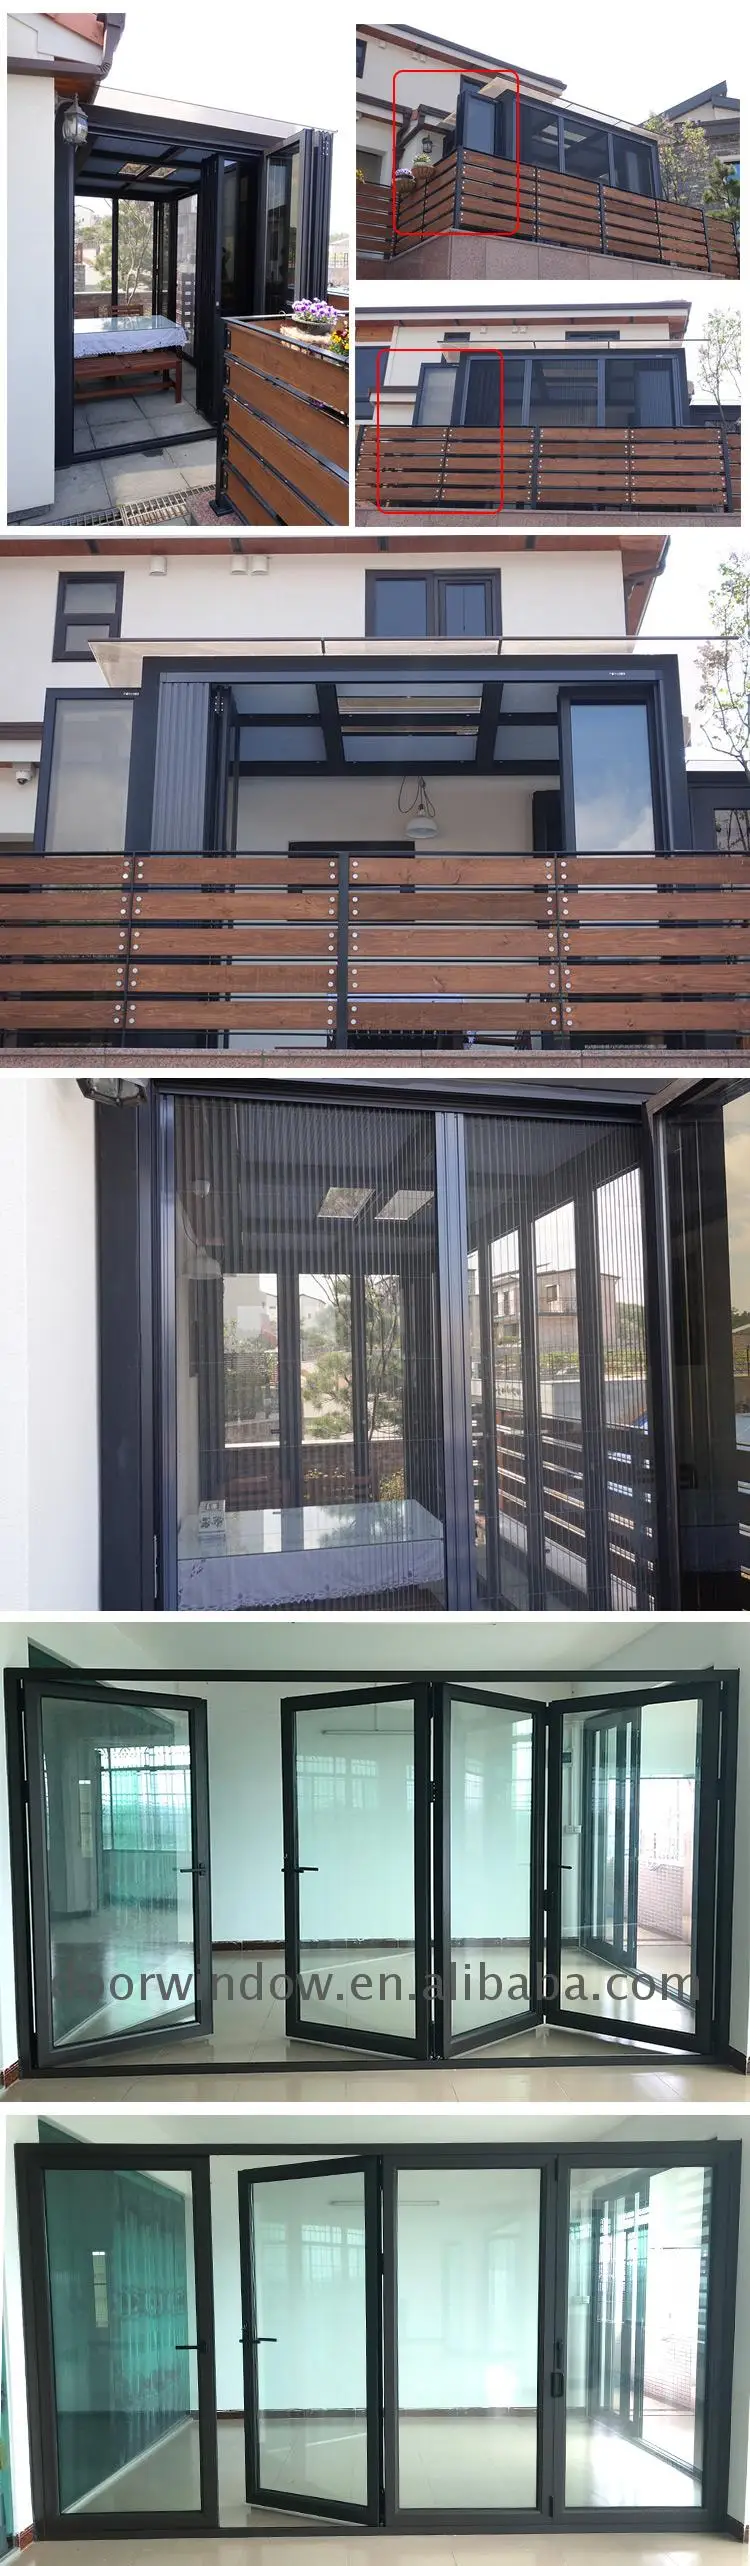 High quality low price aluminium bi-fold windows and aluminum profile bi fold folding window